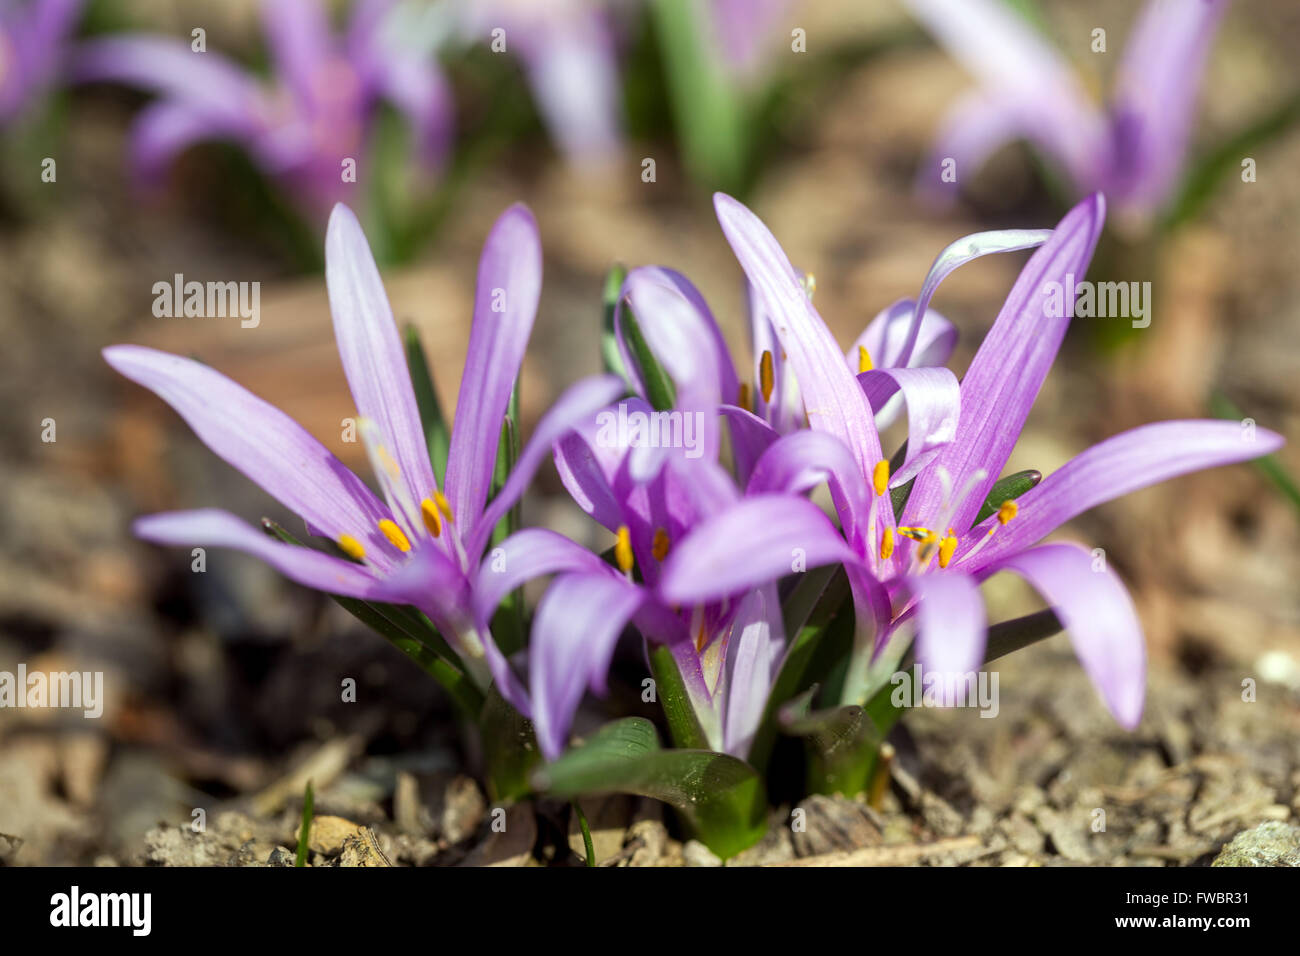 Colchicum bulbocodium syn. Bulbocodium vernum, the Spring Meadow Saffron flower growing on ground Stock Photo